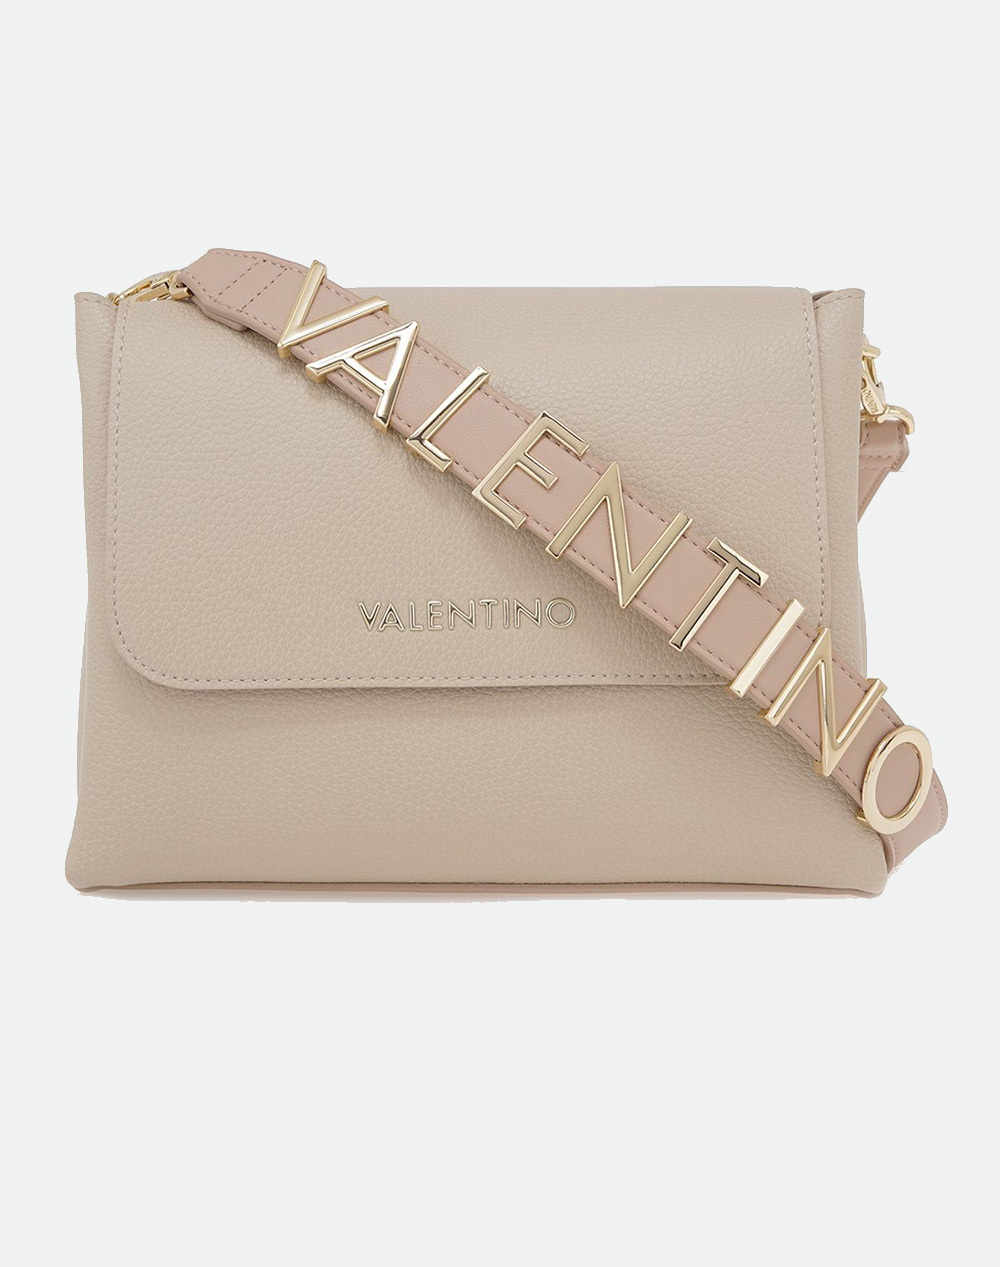 VALENTINO SATCHEL / CROSSBODY BAGS (Dimensions: 27 x 20 x15 cm)